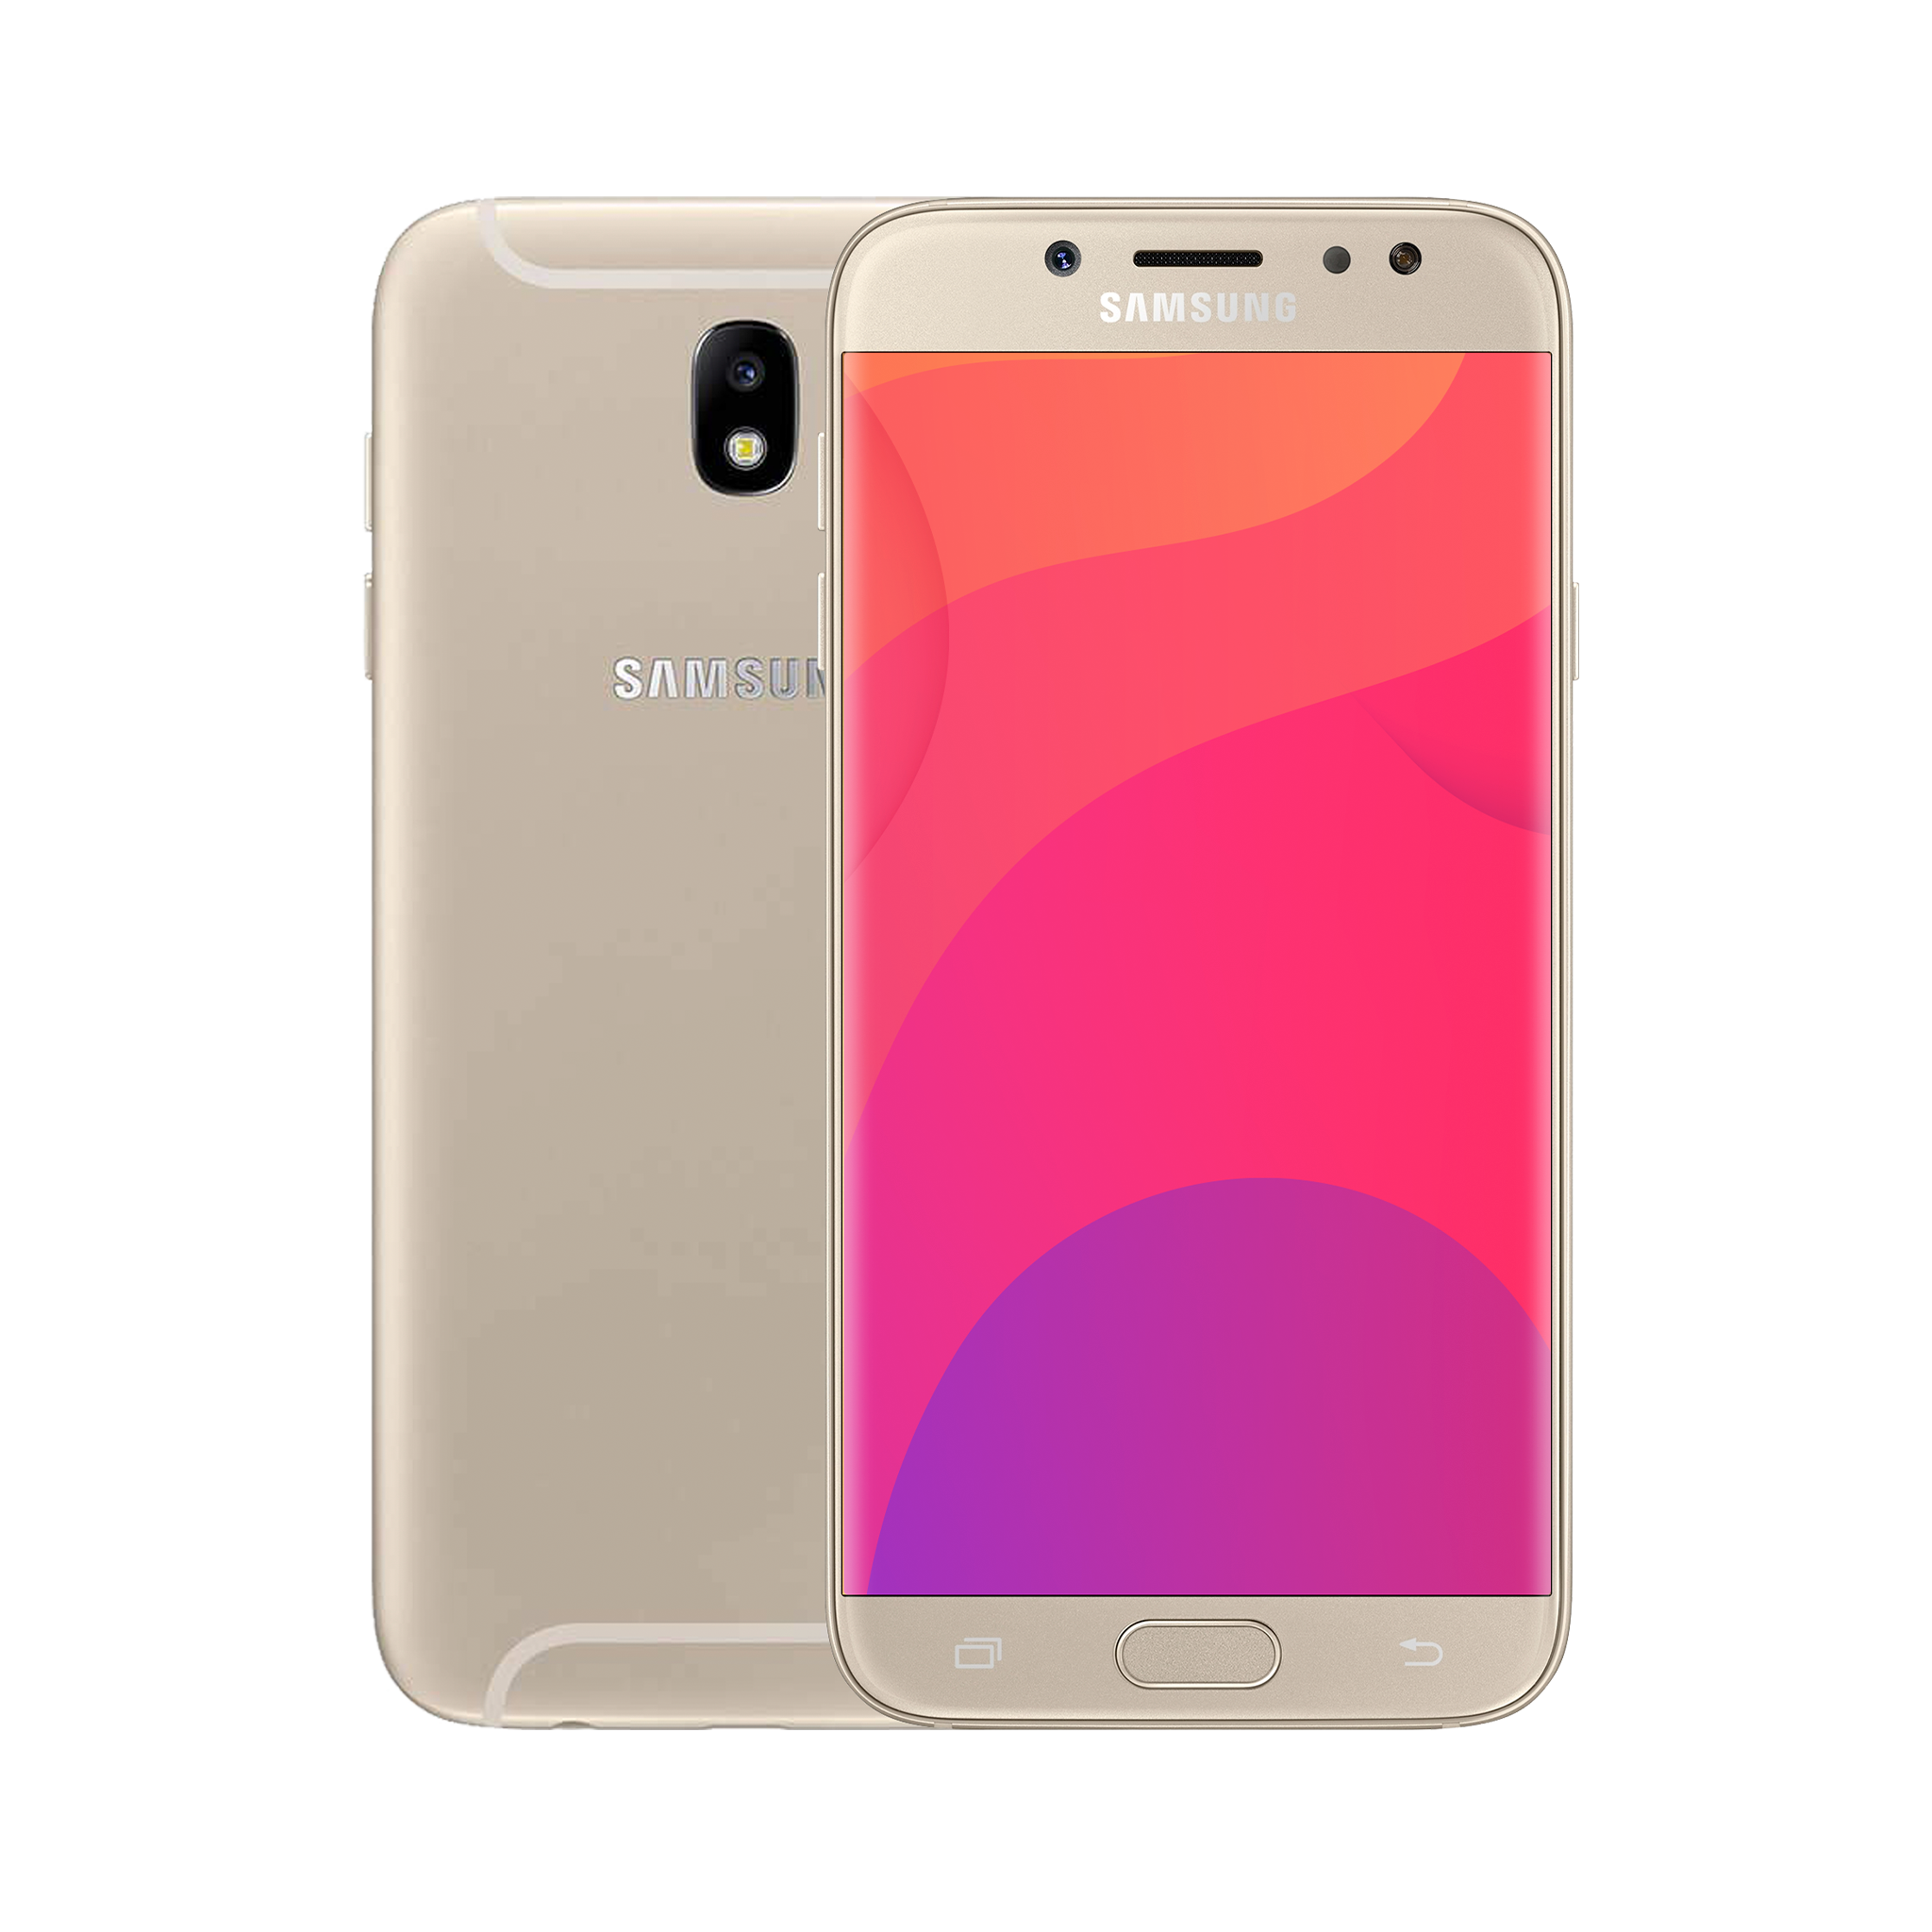 Samsung Galaxy J7 Pro 32GB Gold